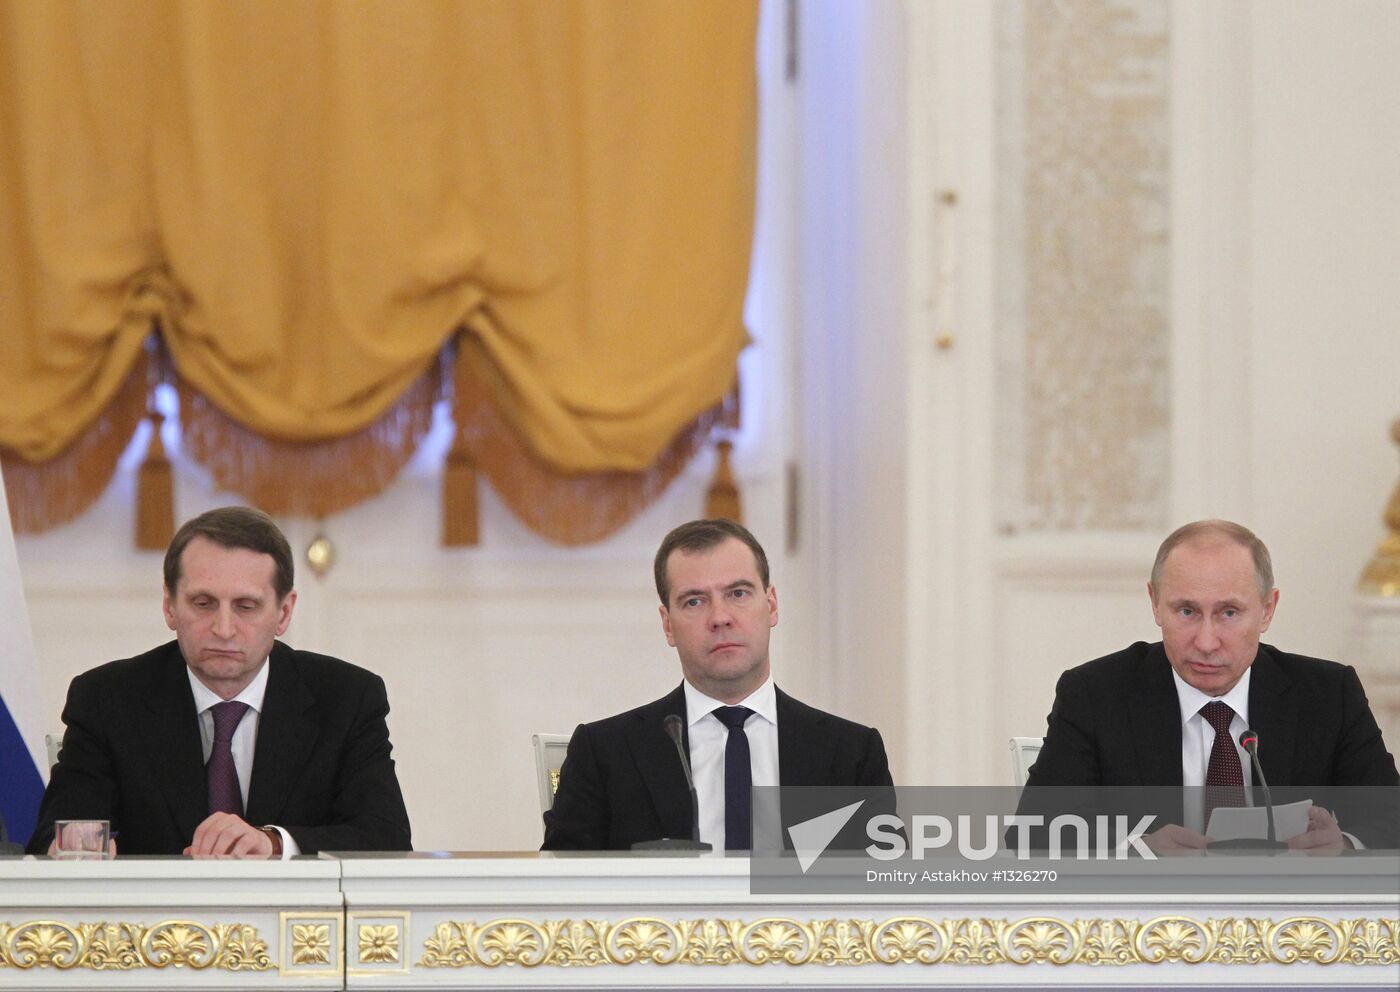 Putin, Medvedev attends State Council meeting in Kremlin